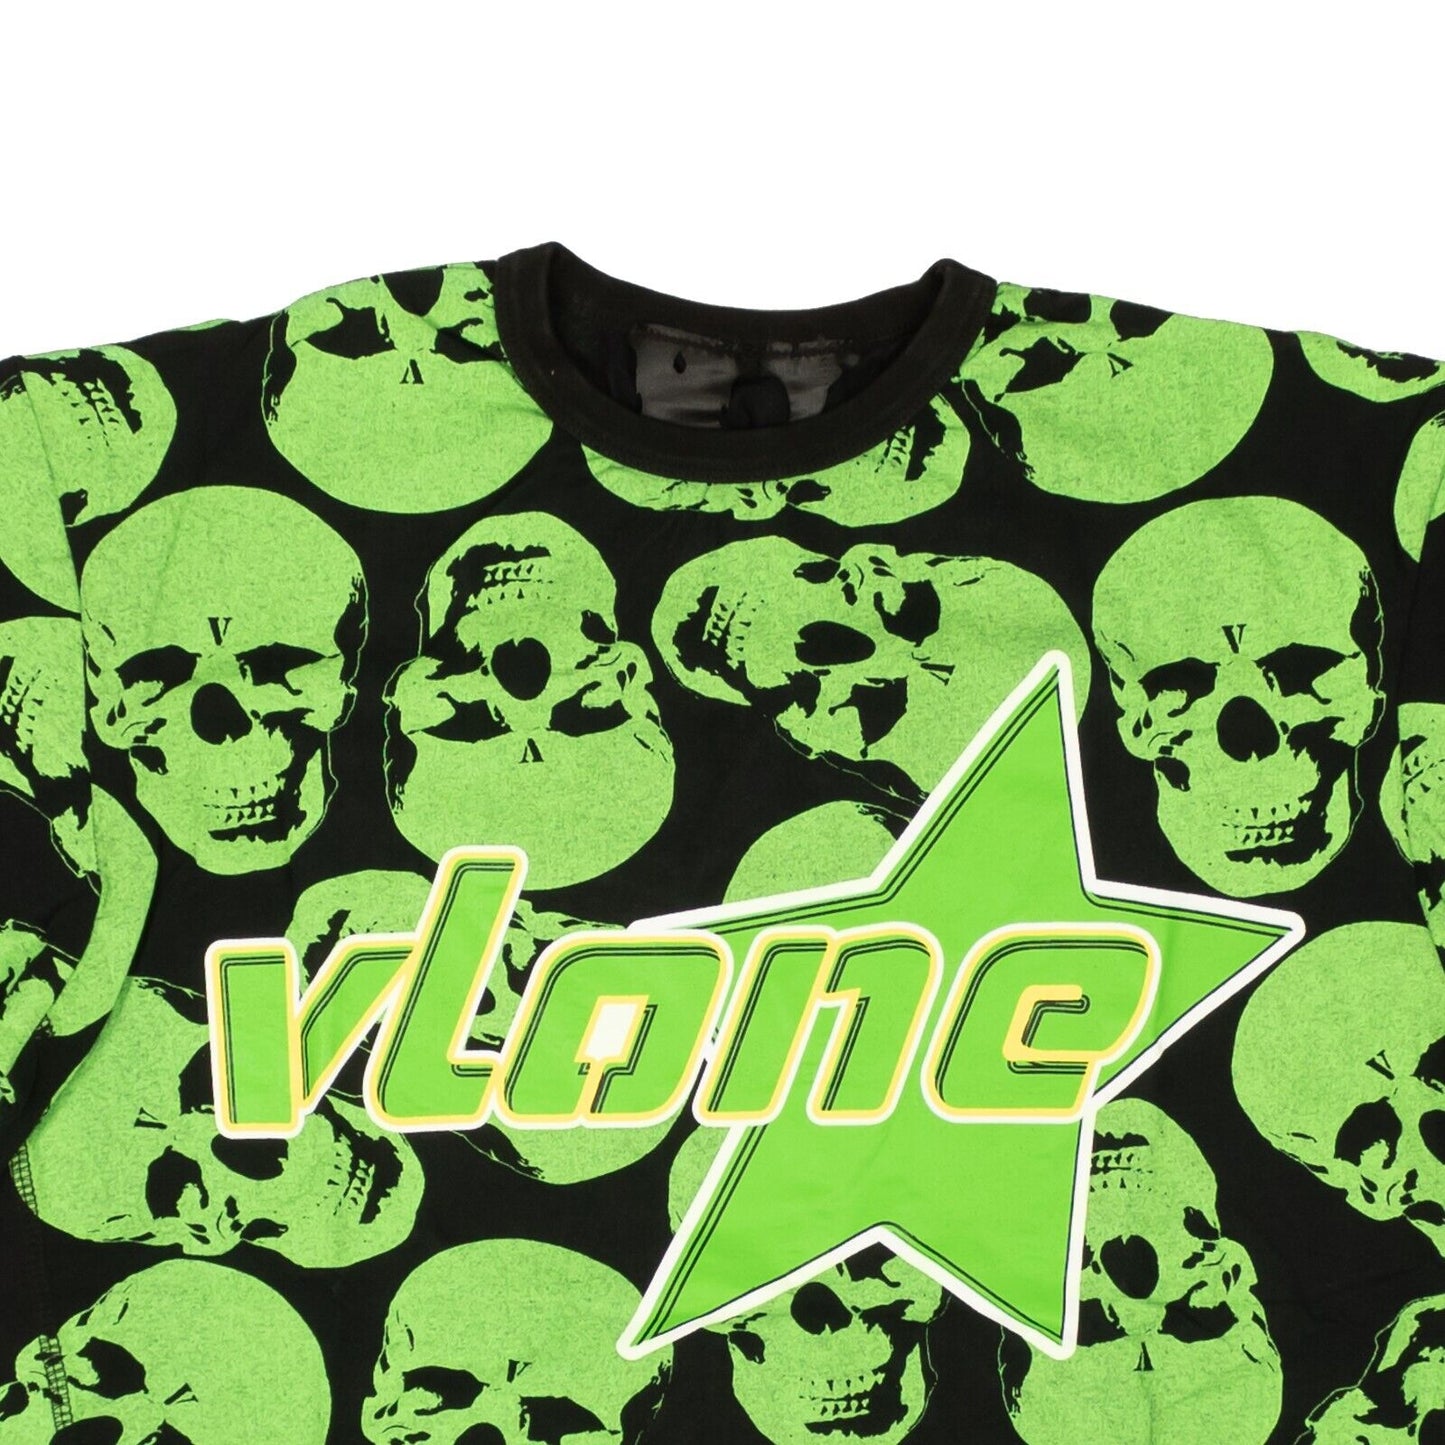 Vlone Crypt Skull T-Shirt - Green/Black